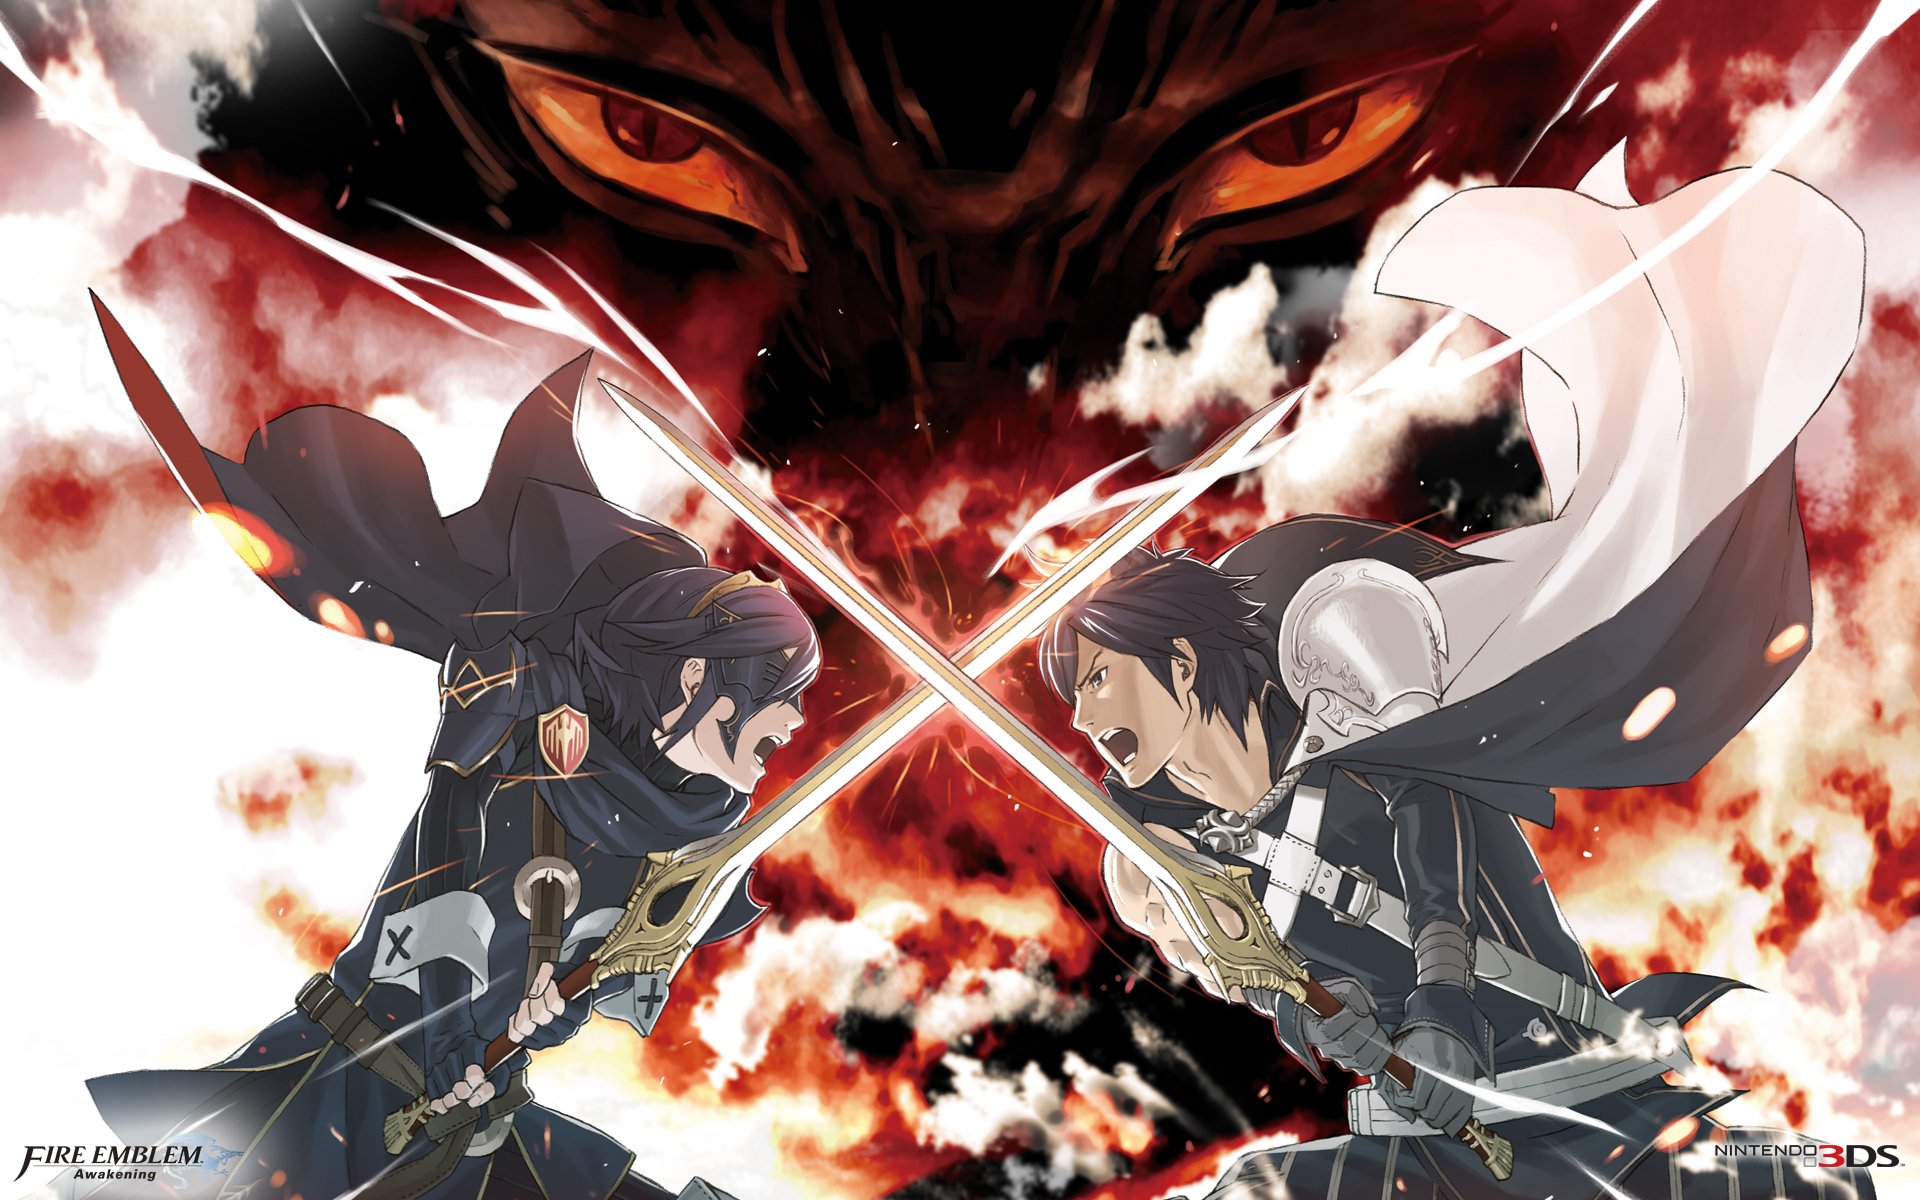 fire emblem awakening wallpaper,cg artwork,anime,fictional character,graphic design,black hair